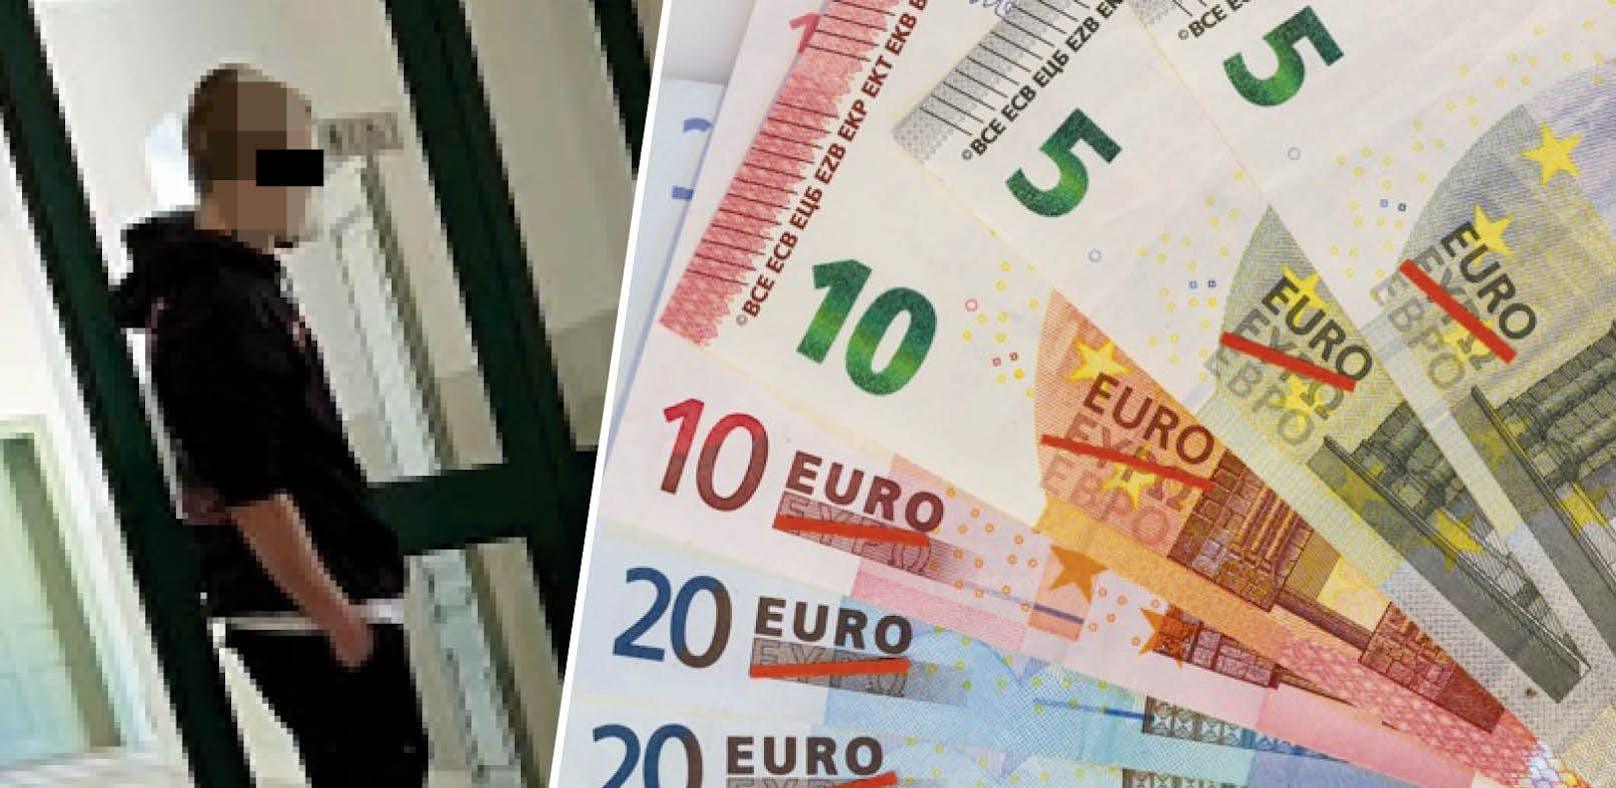 Darum kaufte sich Lehrling 18.270 Euro Falschgeld